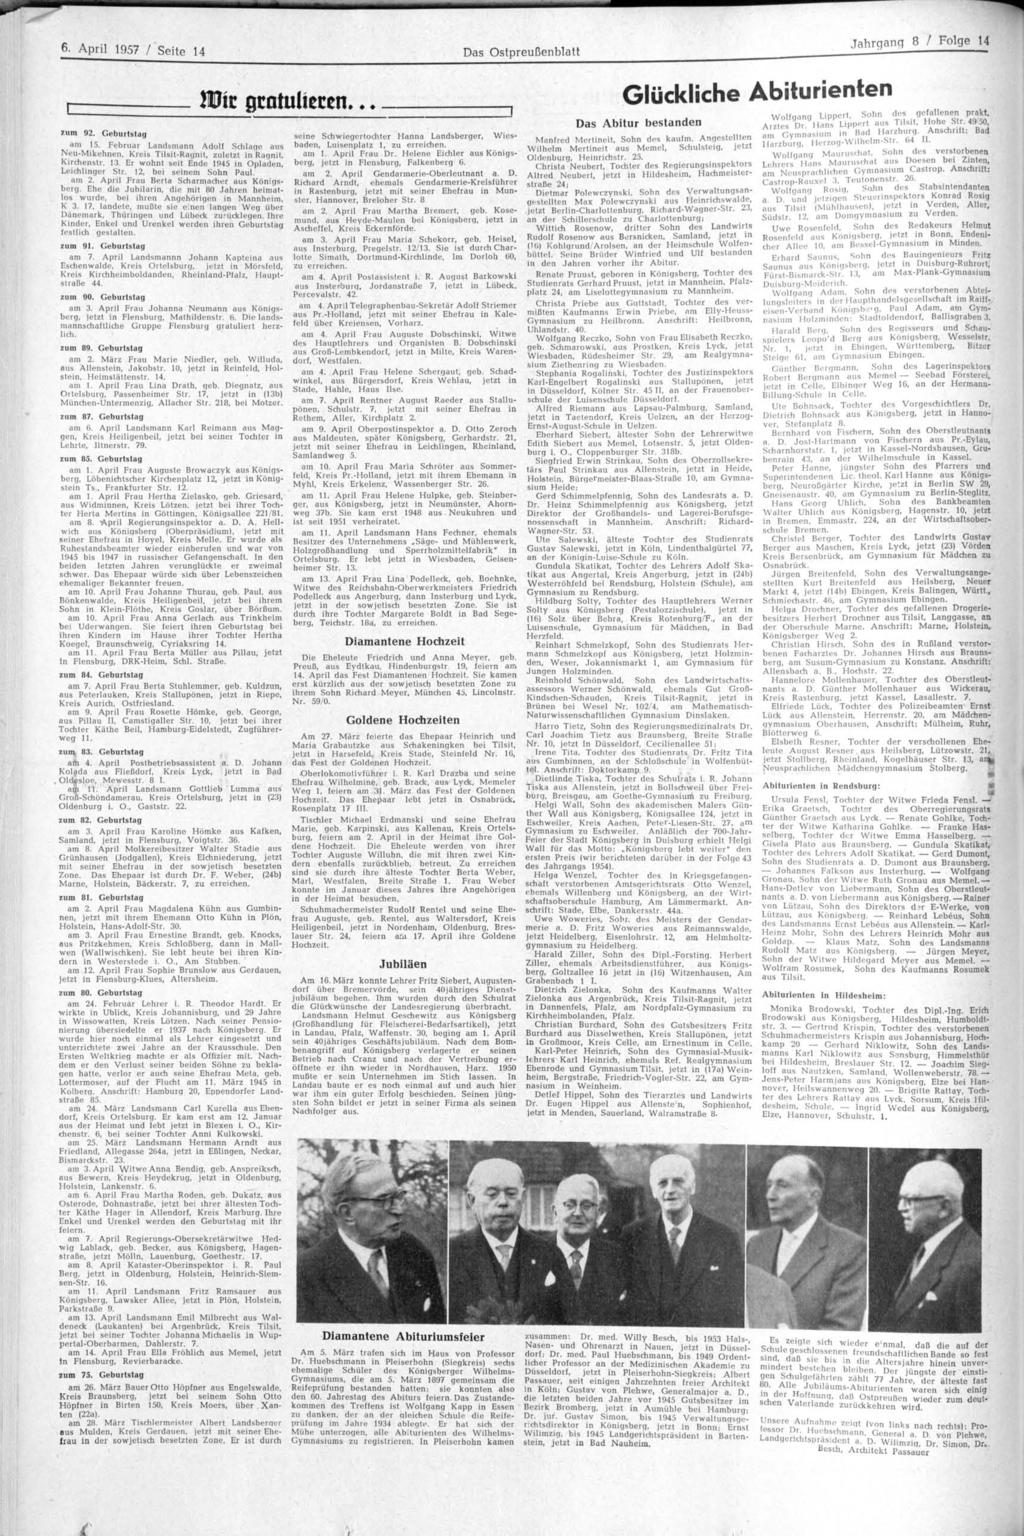 6. April 1957 / Seite 14 Das Ostpreußenblatt Jahrgang 8 / Folge 14 zum 92. Geburtstag HJir gratulieren.. am 15.